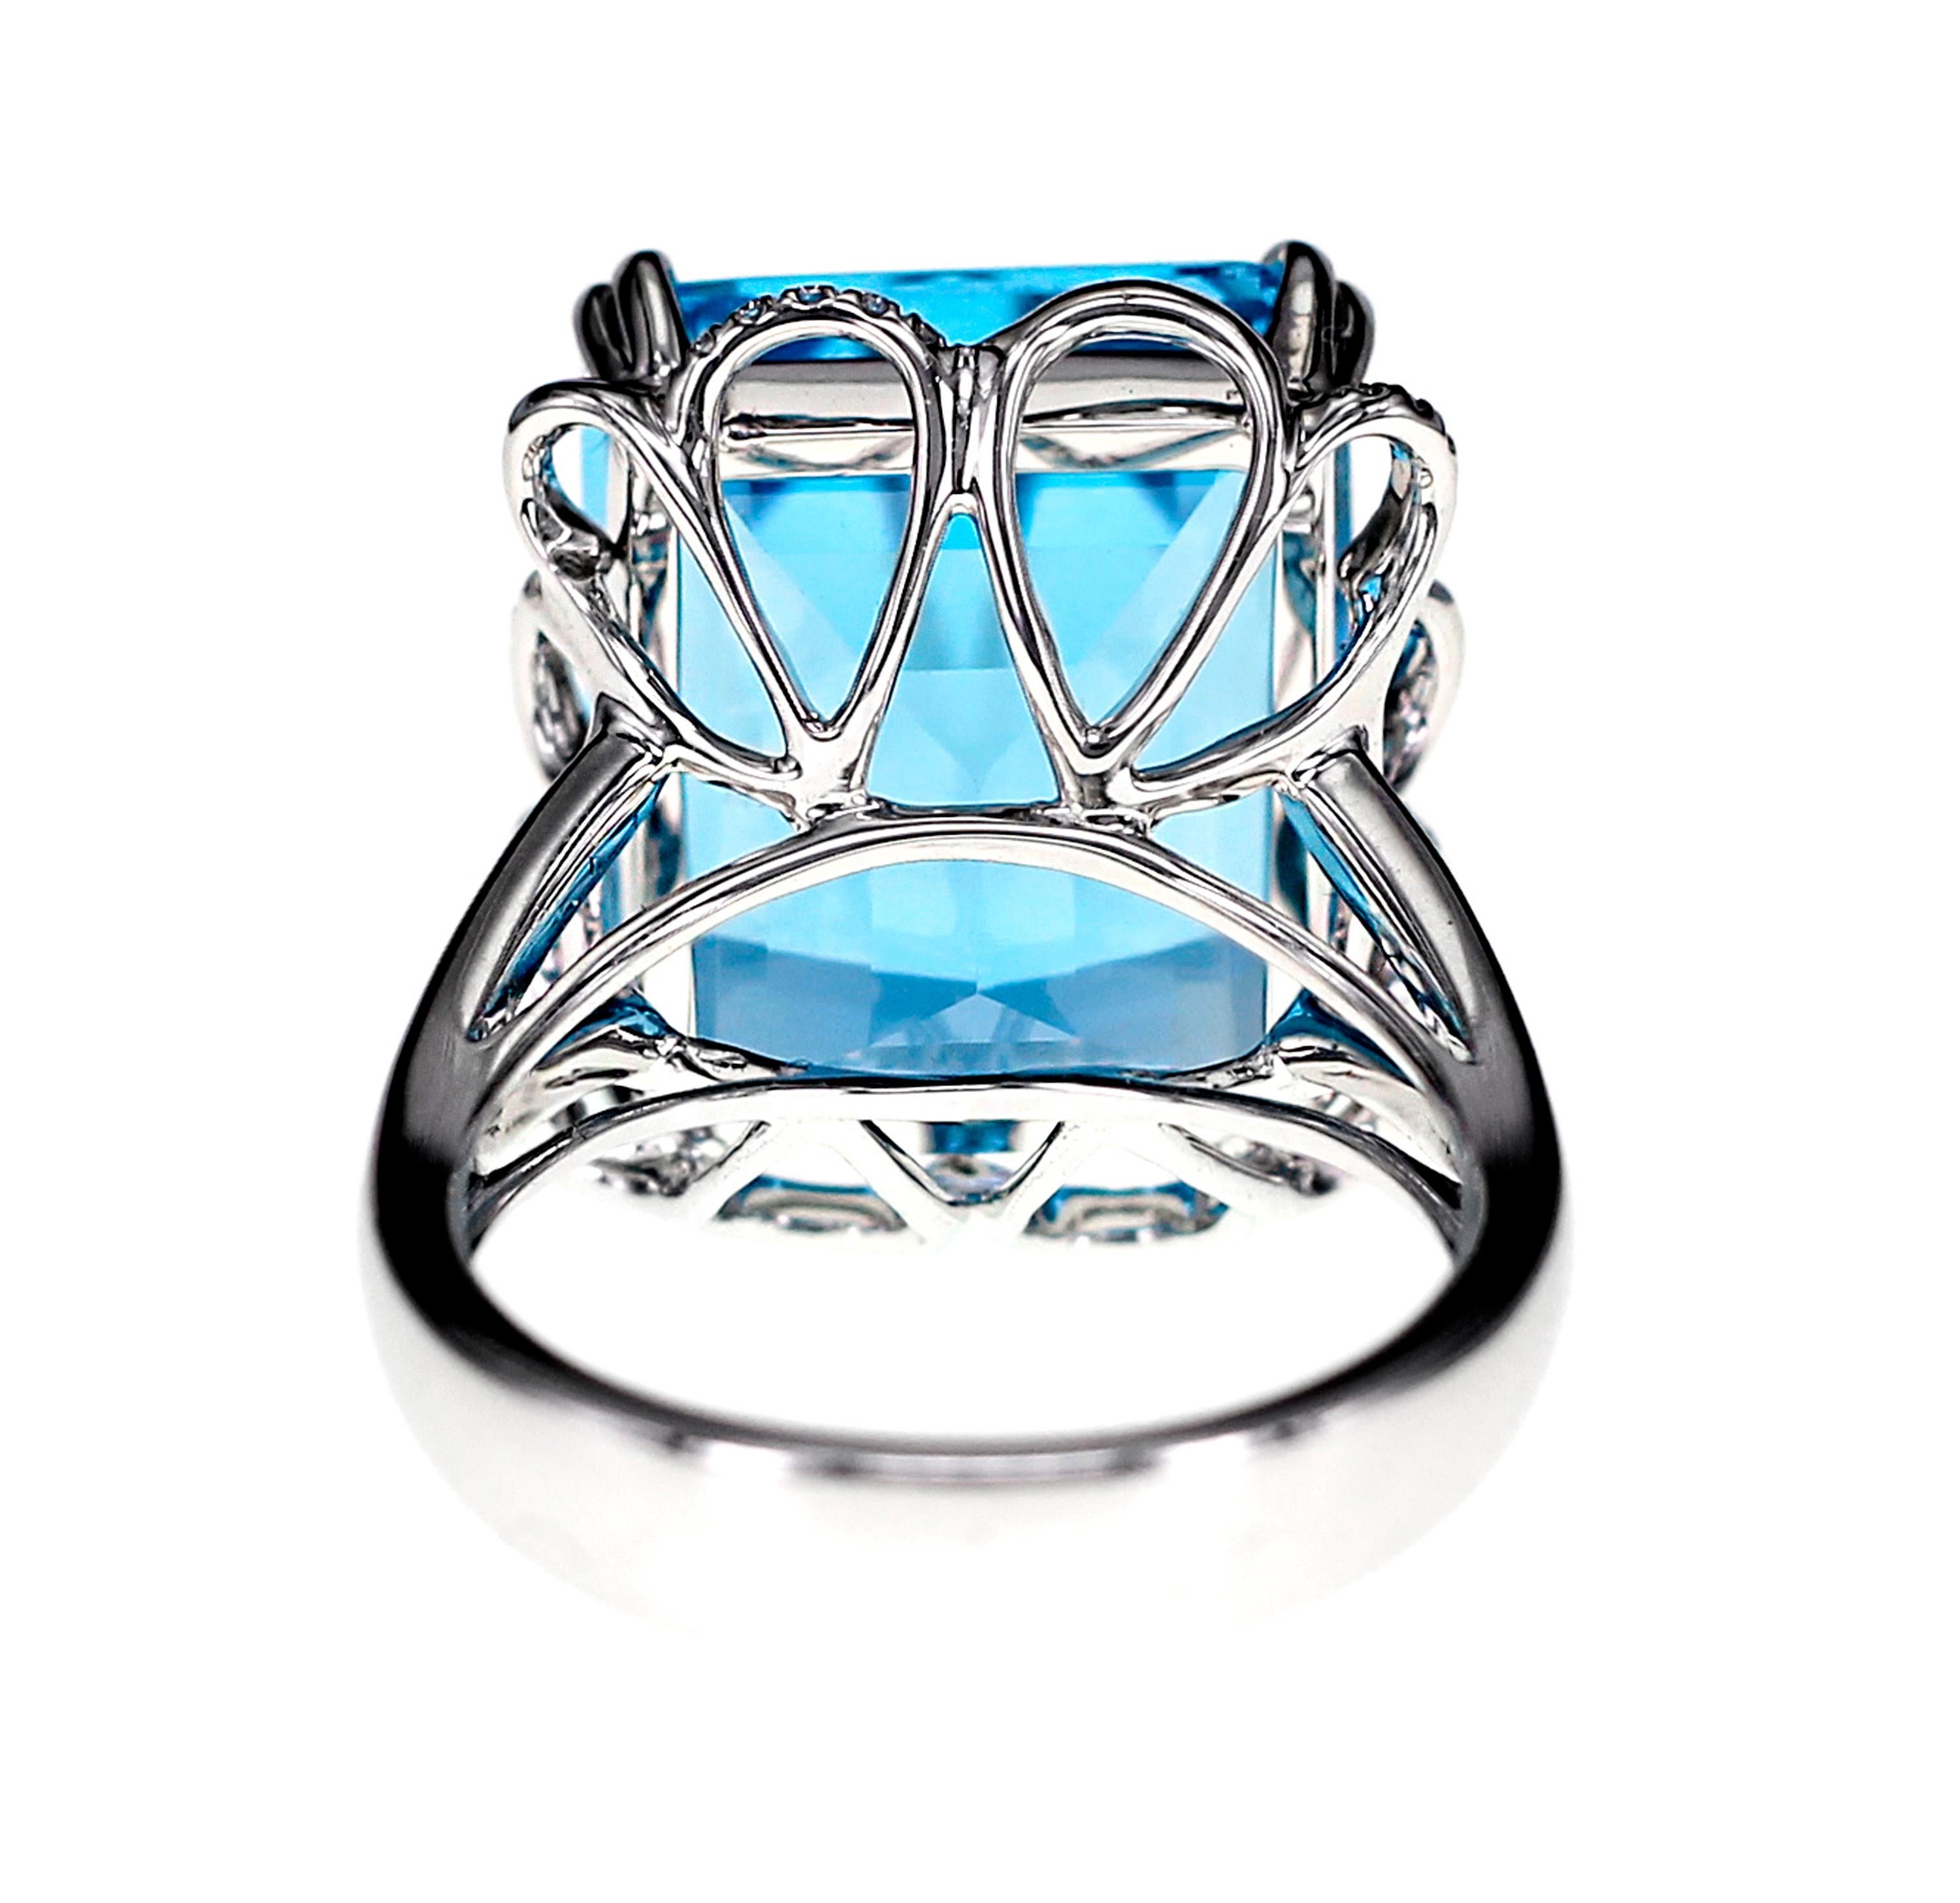 Art Nouveau 21.64 Carat London Blue Topaz and Diamond Ring